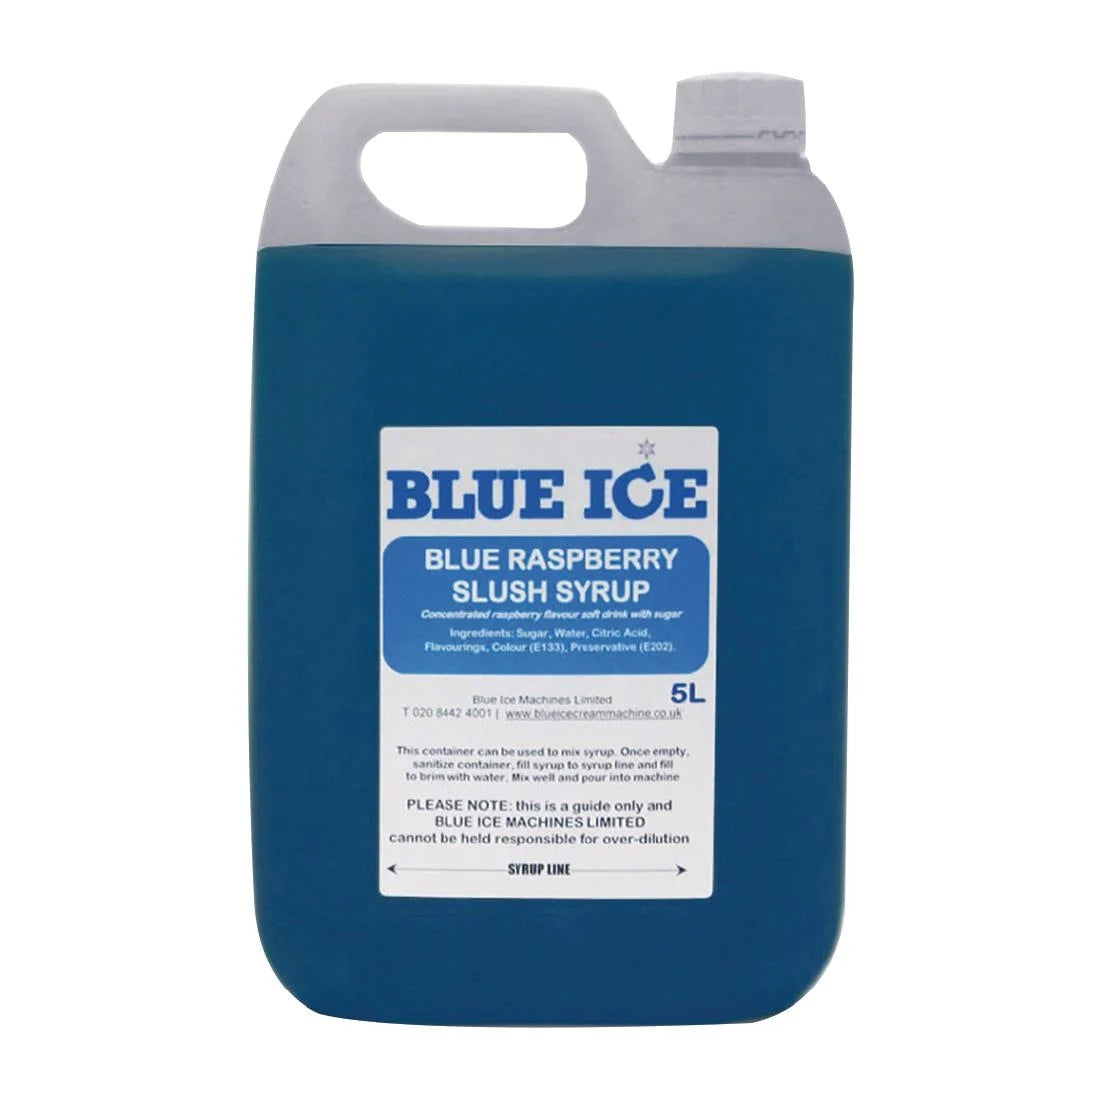 Blue Ice Slush Mix Blue Raspberry Flavour 5Ltr JD Catering Equipment Solutions Ltd